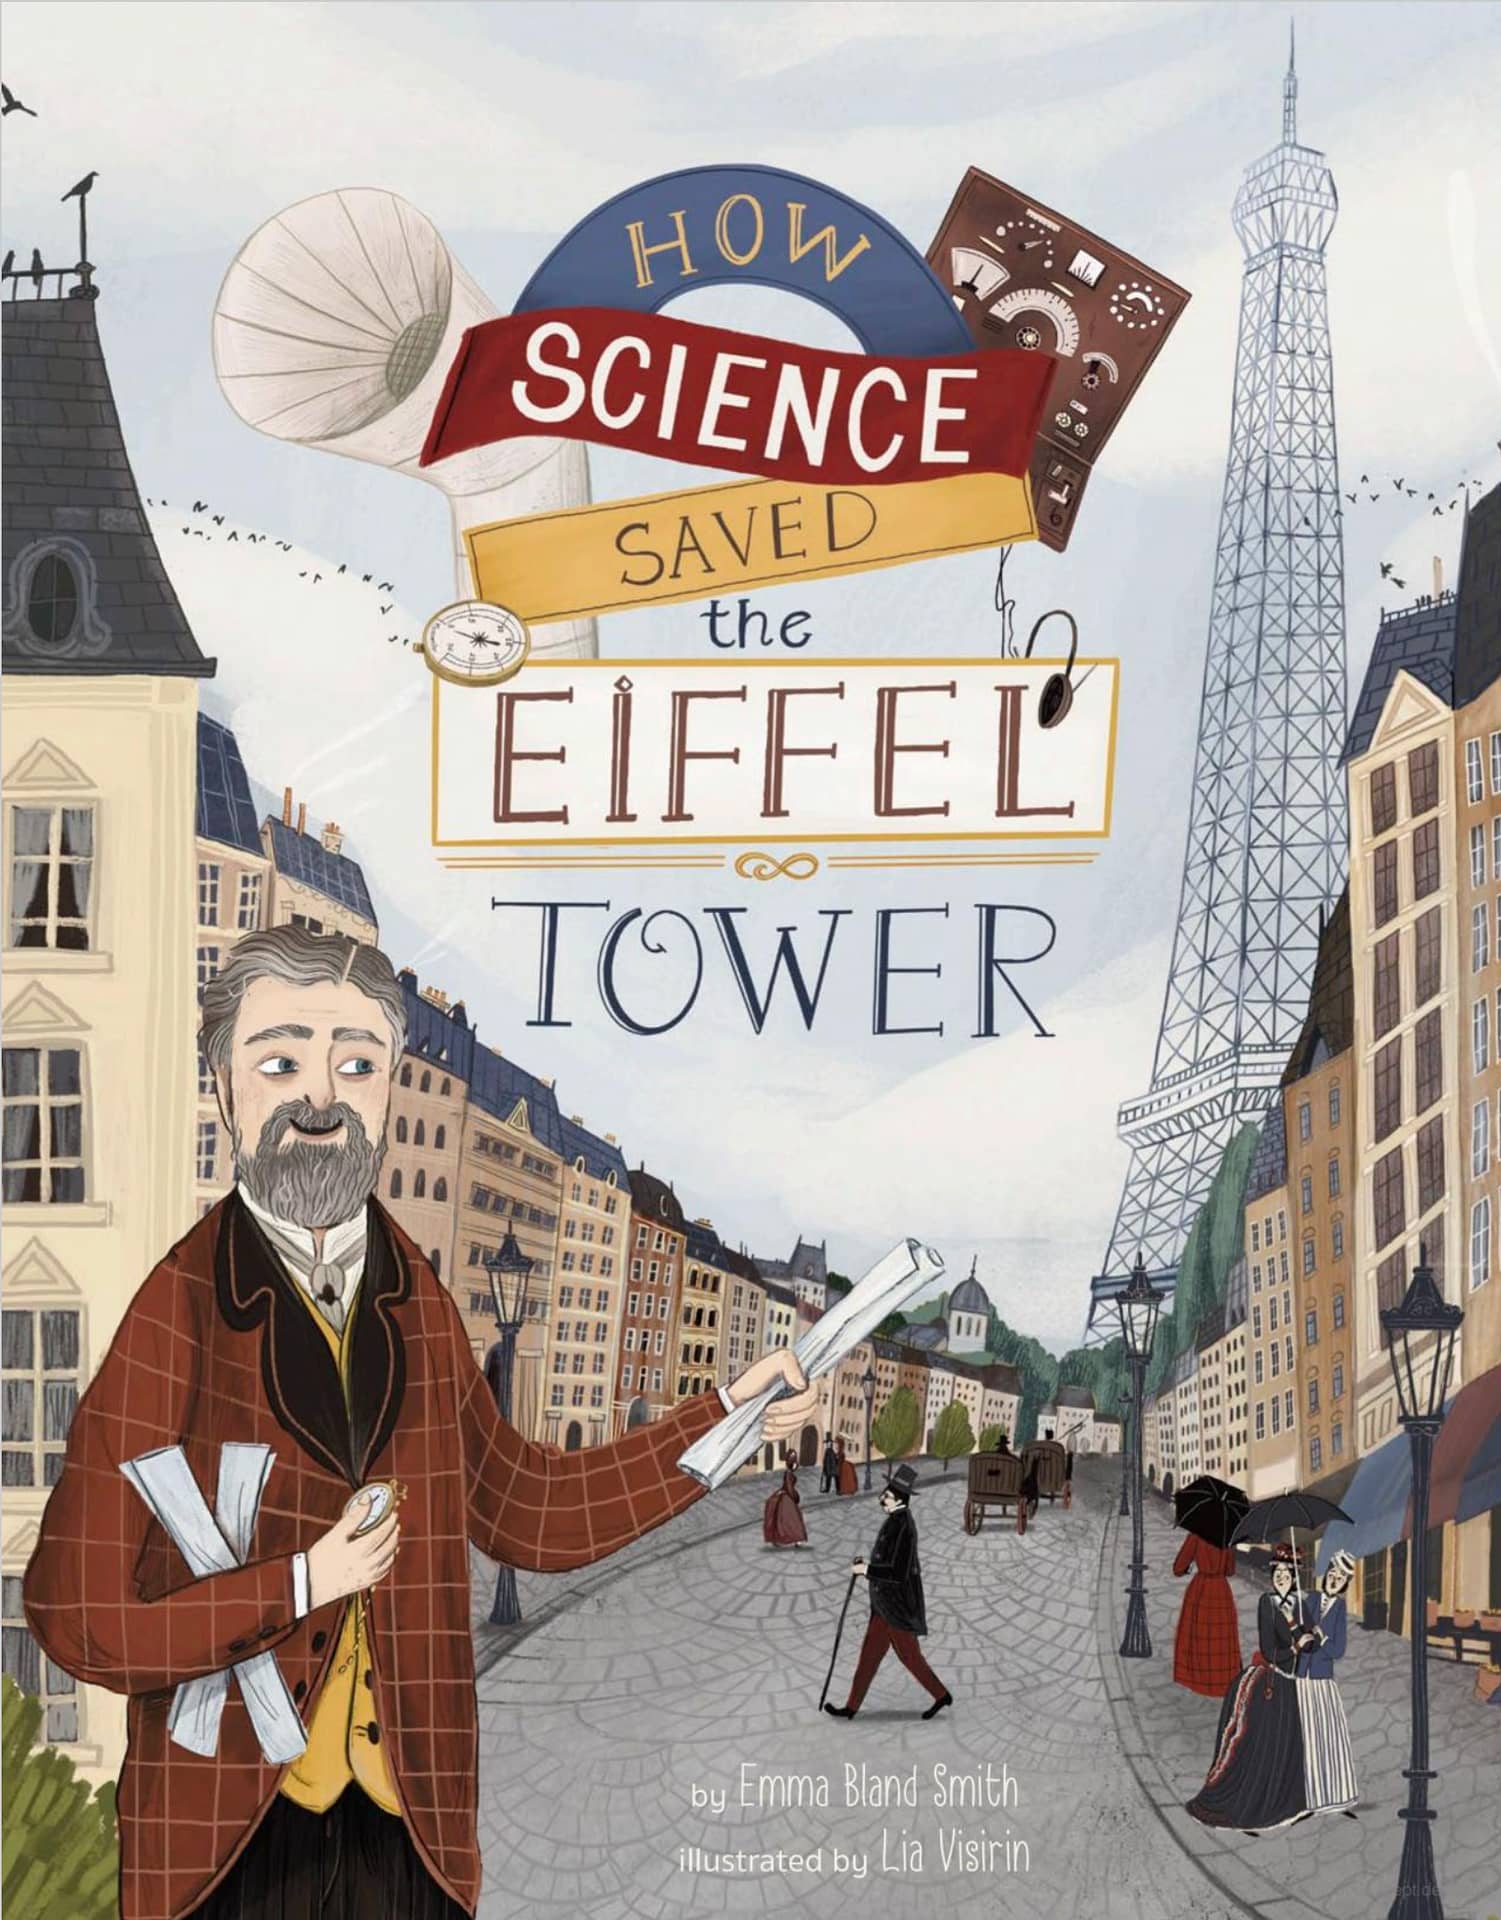 How Science saved the Eiffel Tower- children's book illustrator Lia Visirin